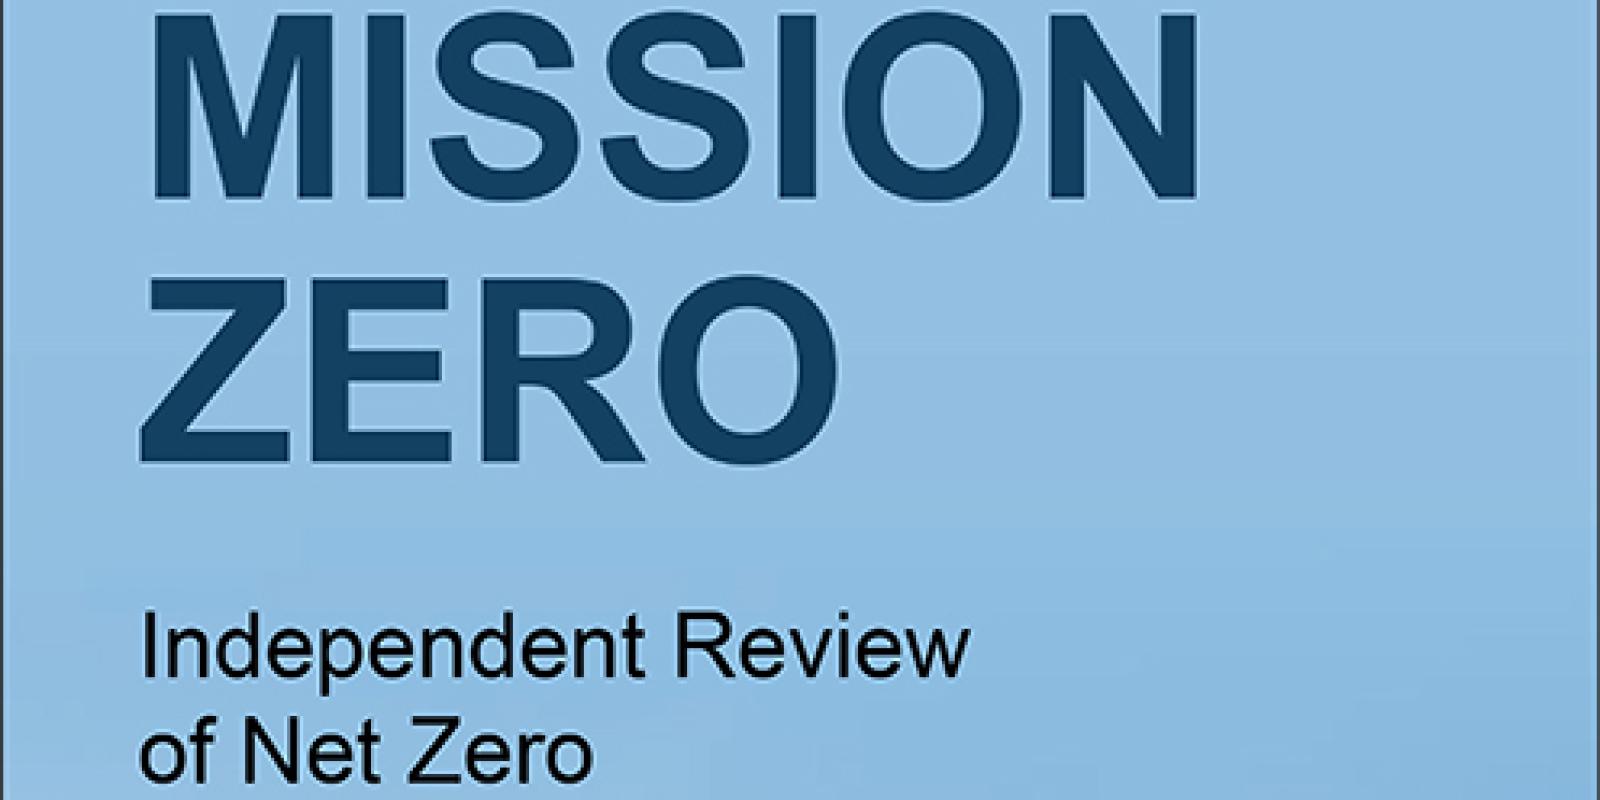 Mission Zero